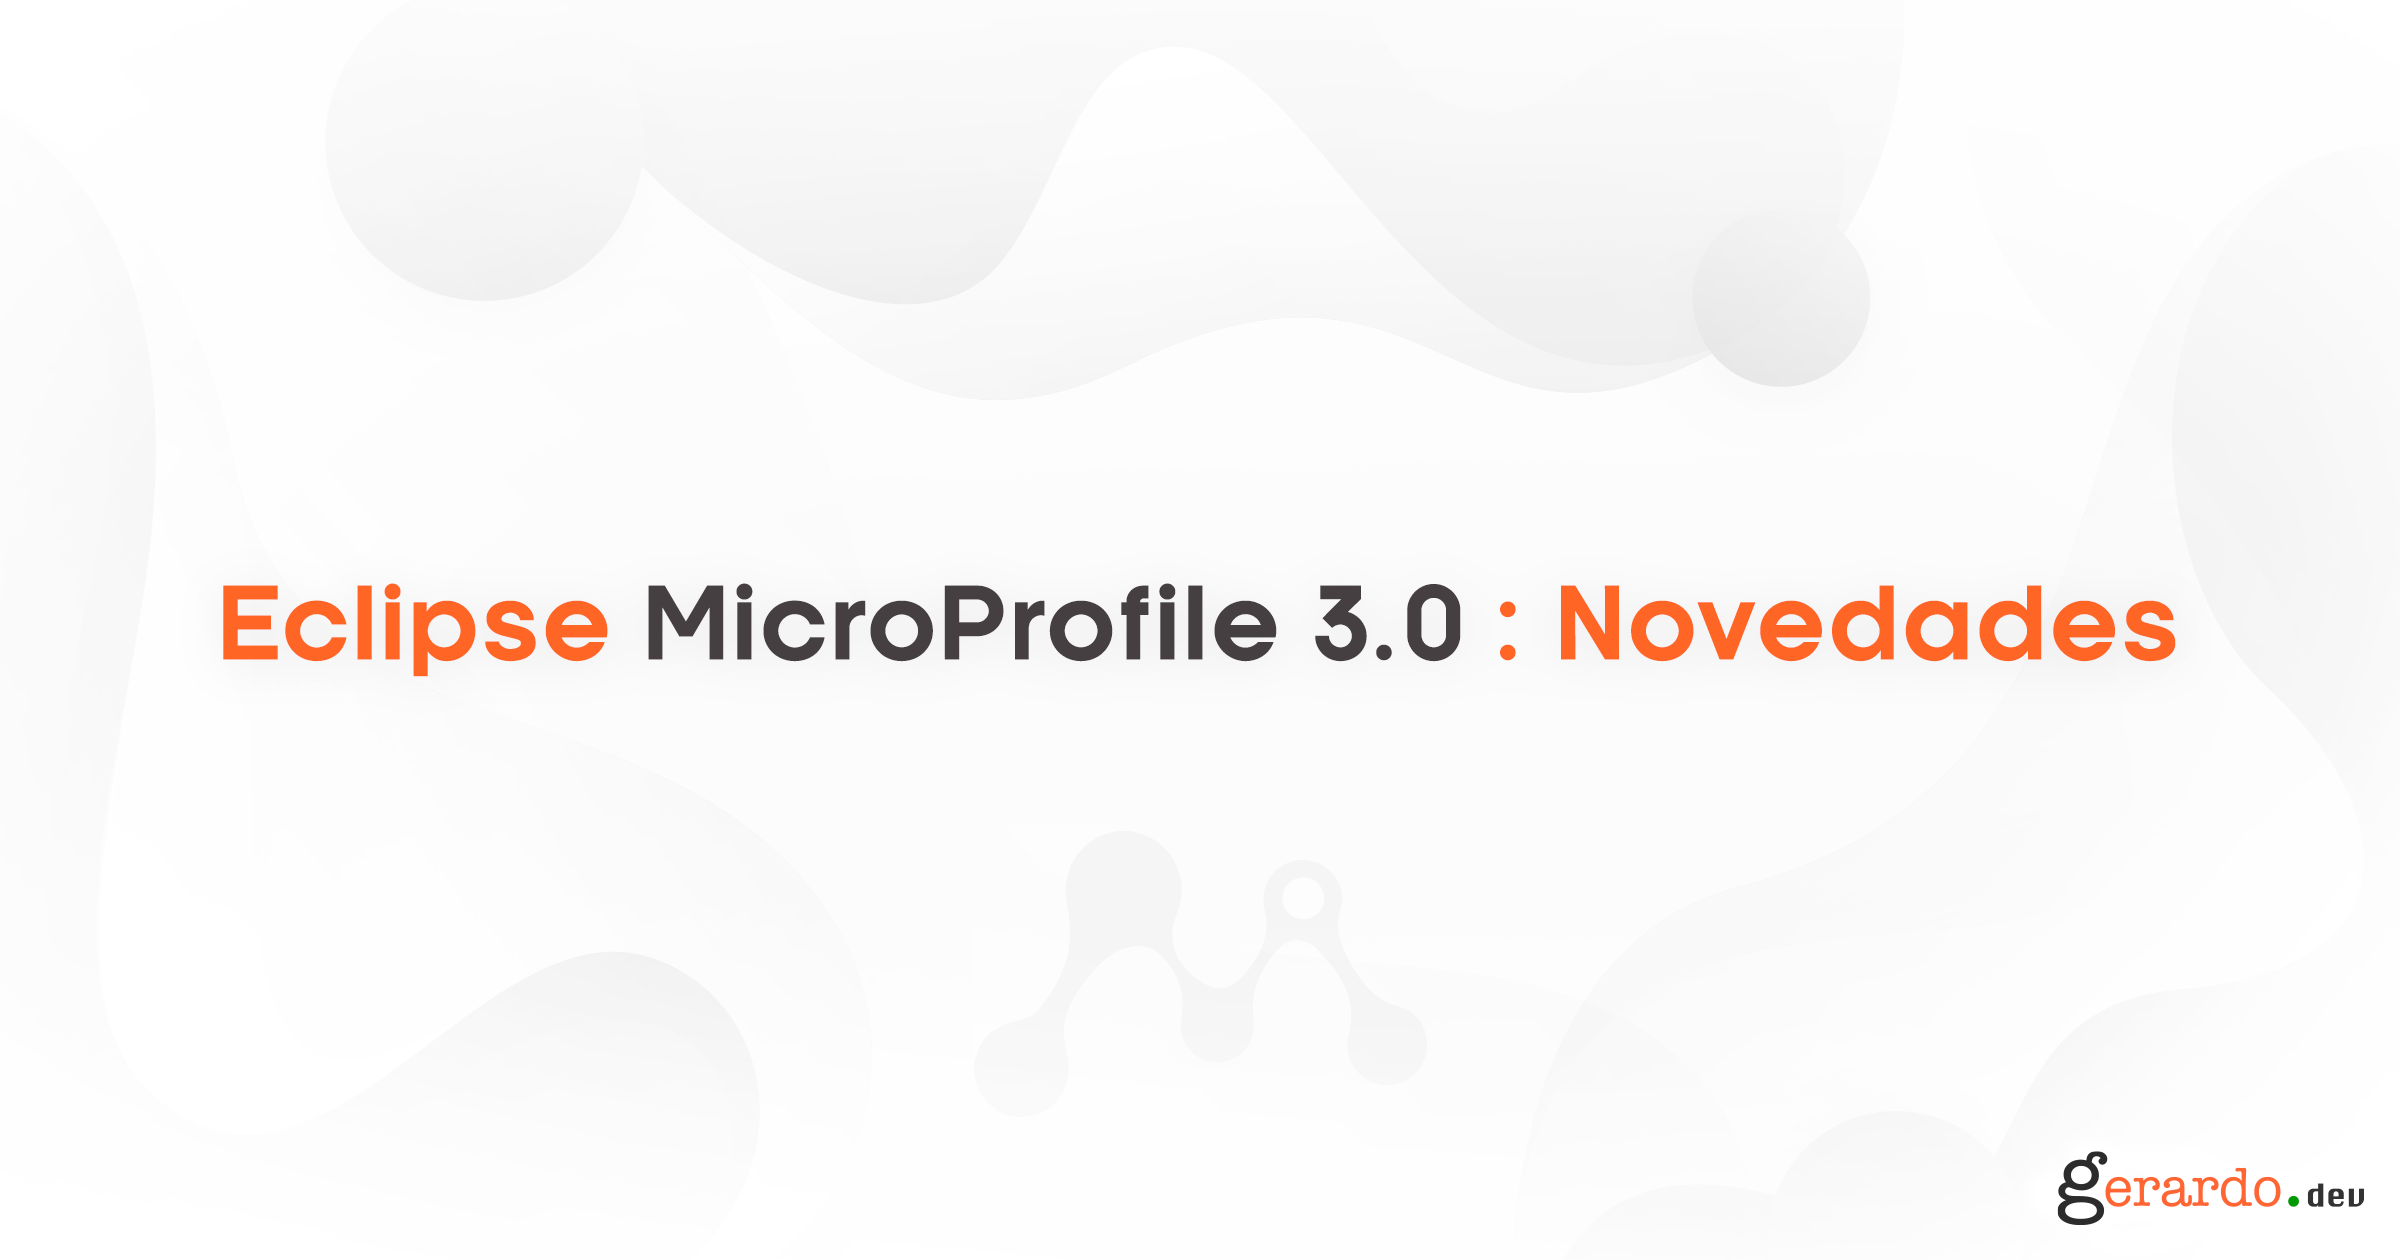 Eclipse MicroProfile 3.0: Novedades